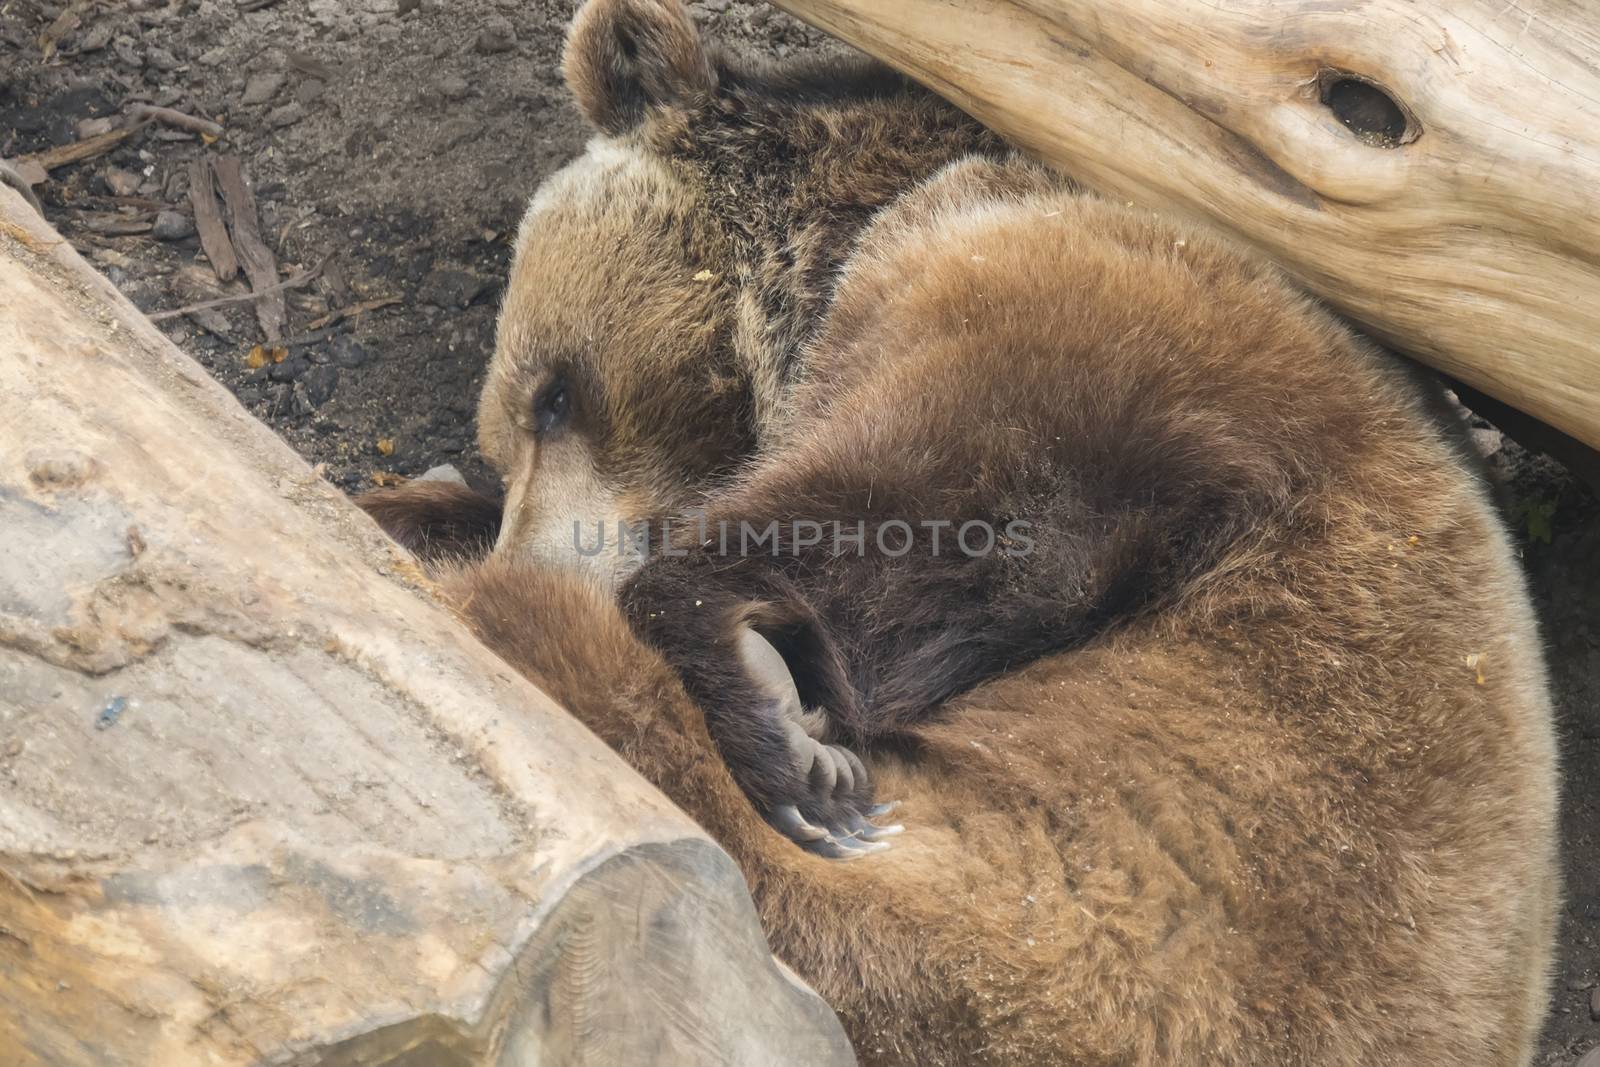 Brown bear sleeping among some trunks